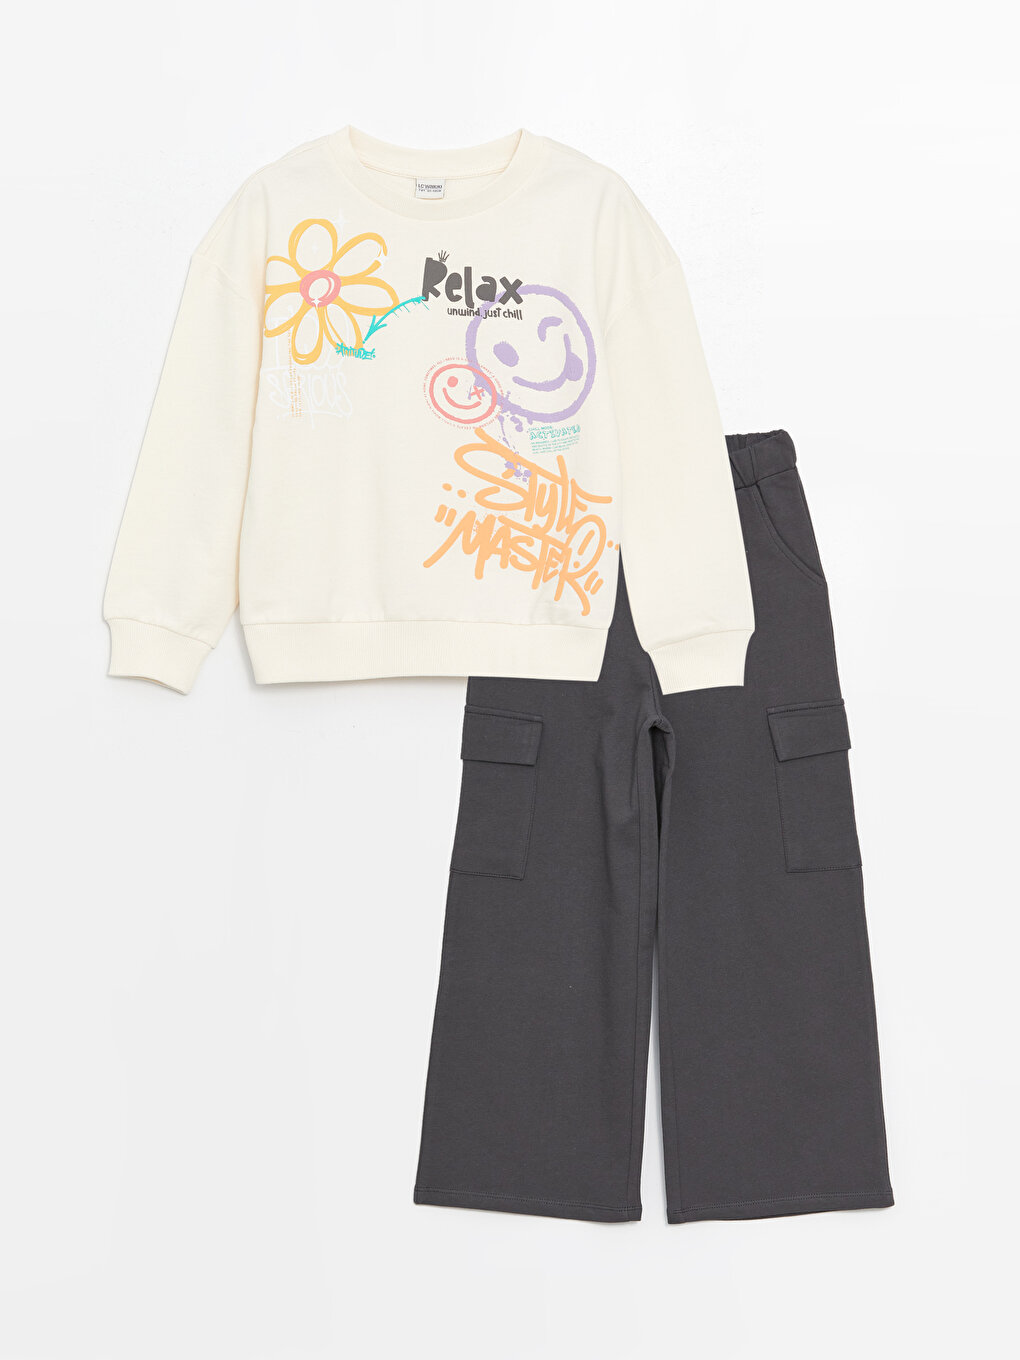 Killer Daily Uniform: Graphic Sweatshirt + Distressed Jeans + Snakeskin  Booties - The Mom Edit